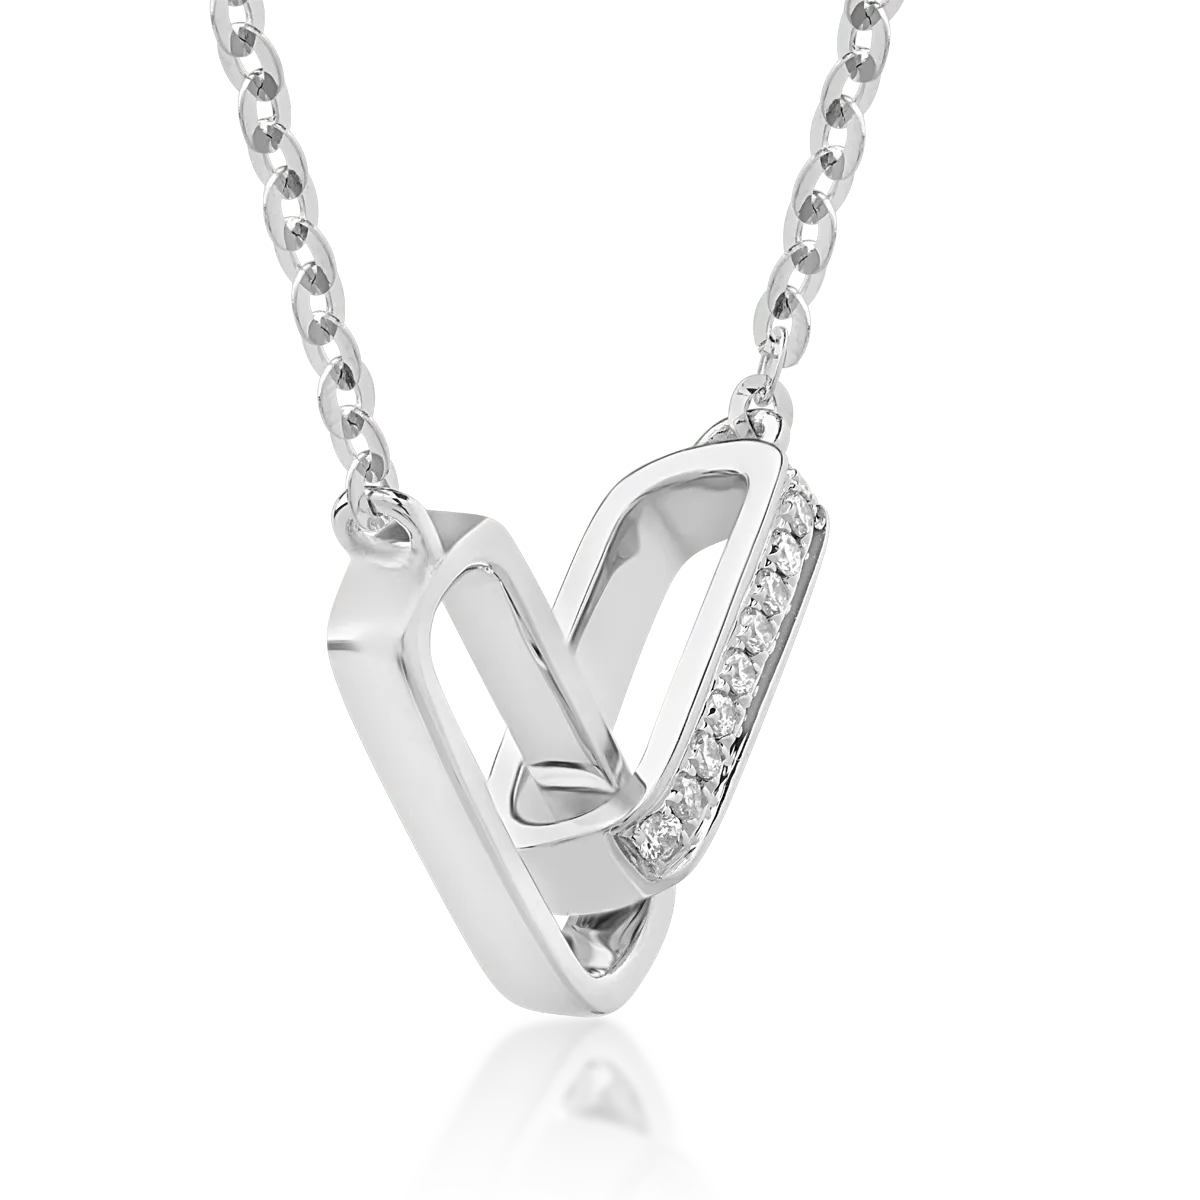 18K white gold pendant chain with 0.026ct diamonds